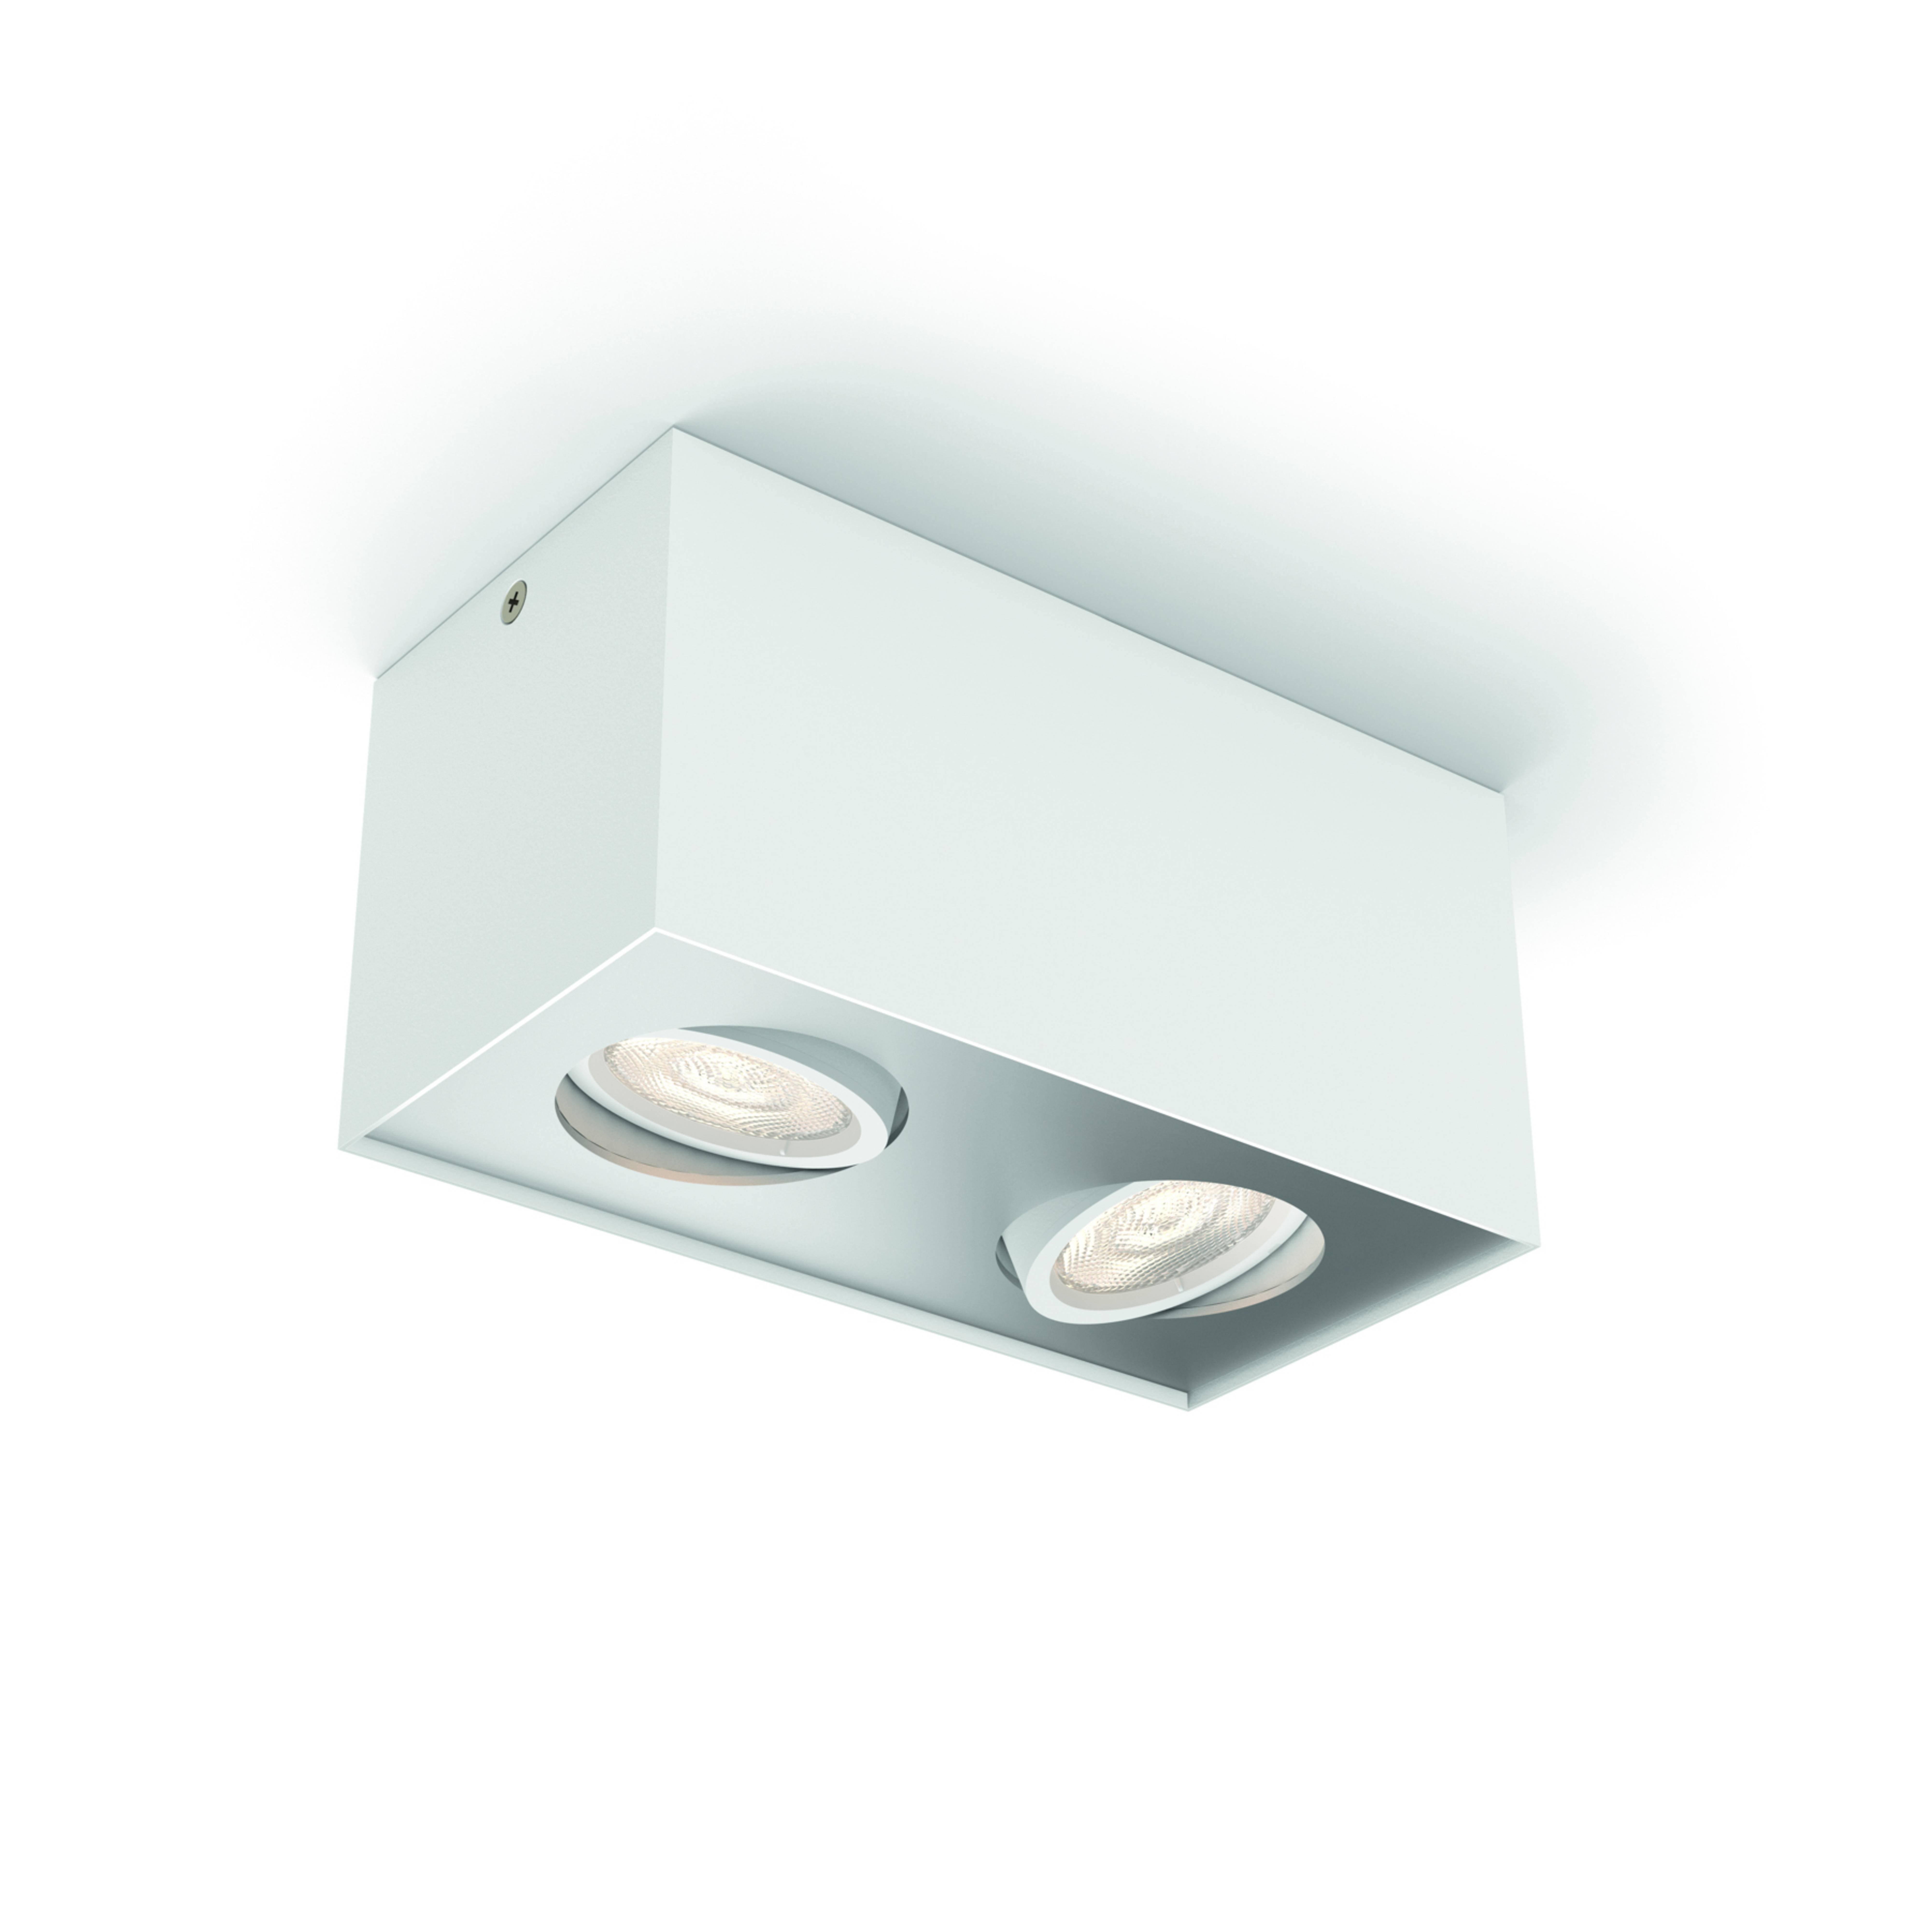 Philips myLiving Box LED-Spot zweiflammig weiß